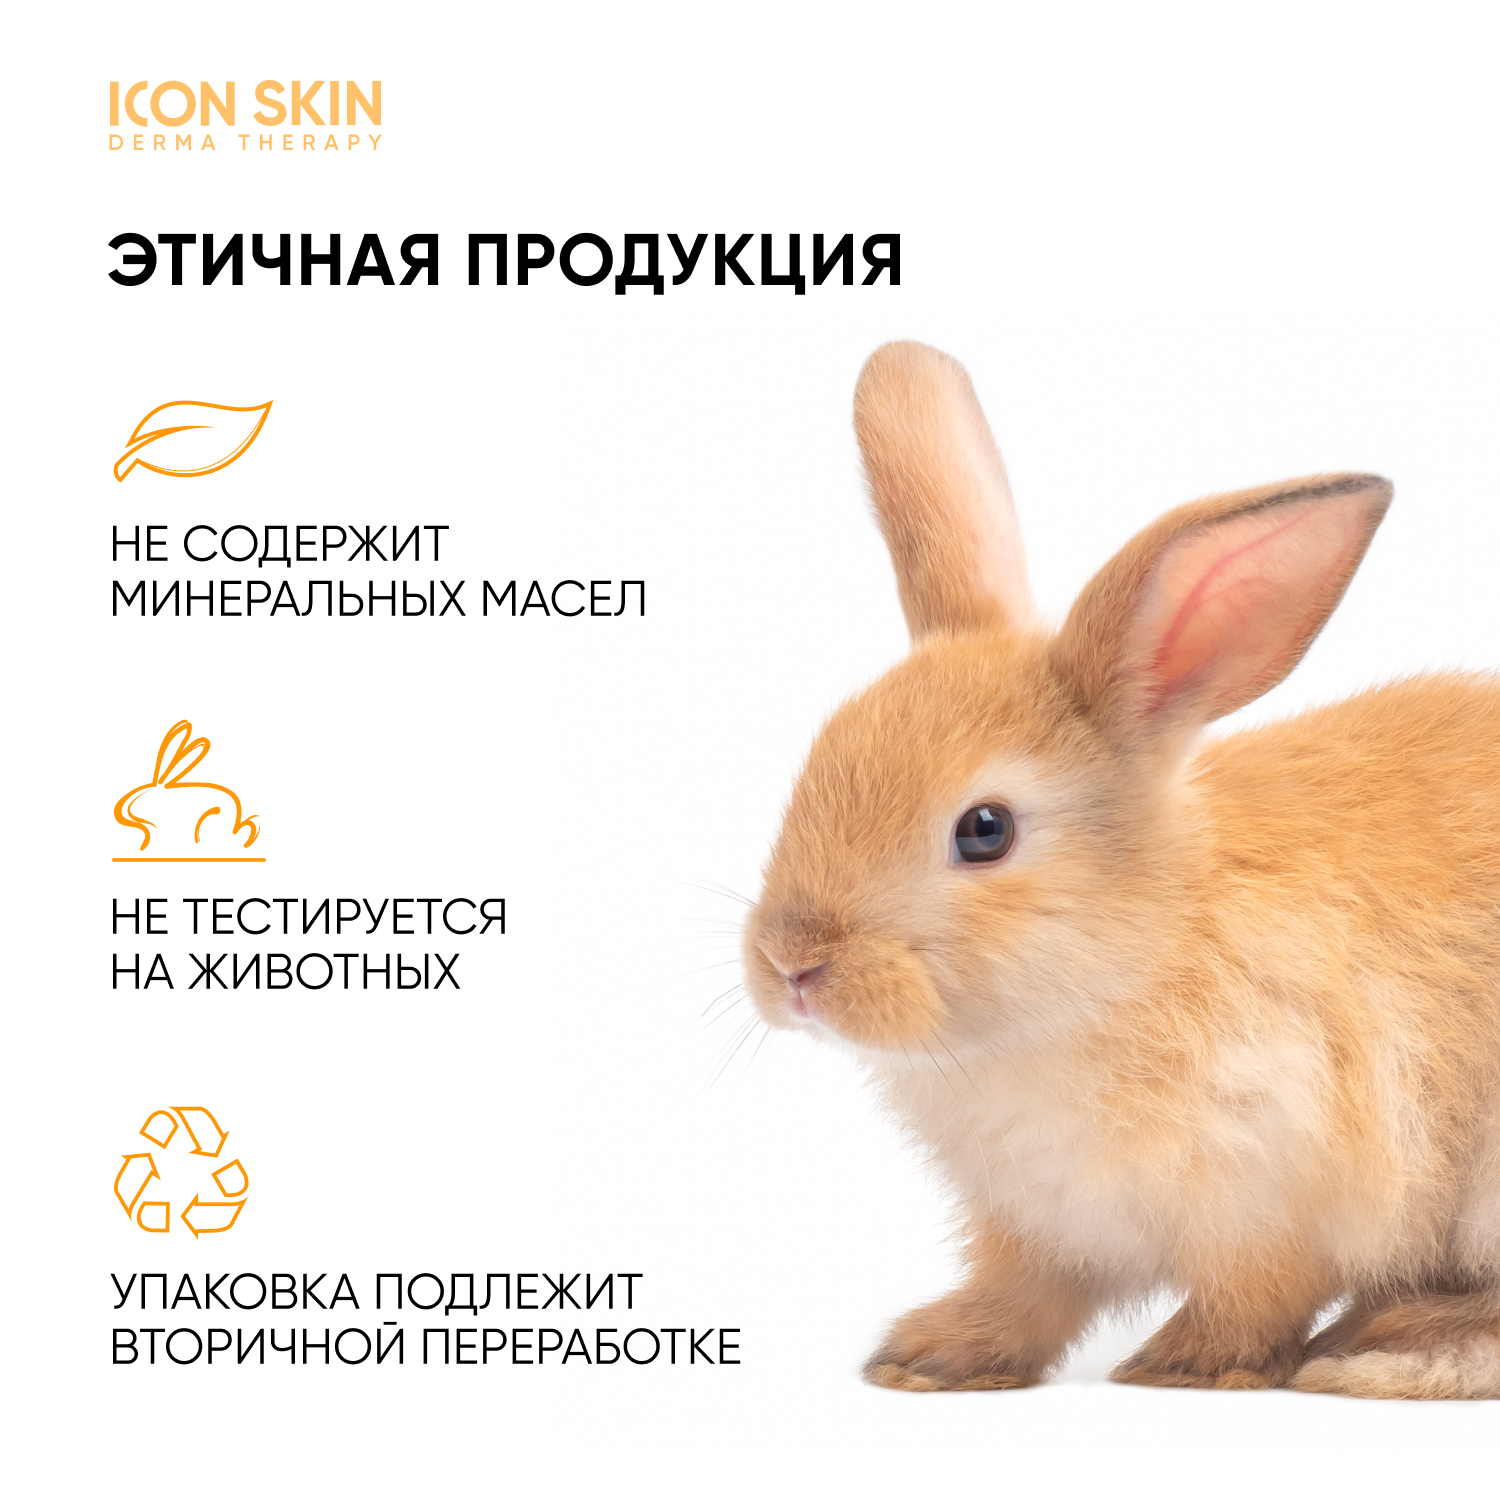 Солнцезащитный крем для лица ICON SKIN SPF 50 увлажняющий для всех типов кожи 50 мл - фото 7